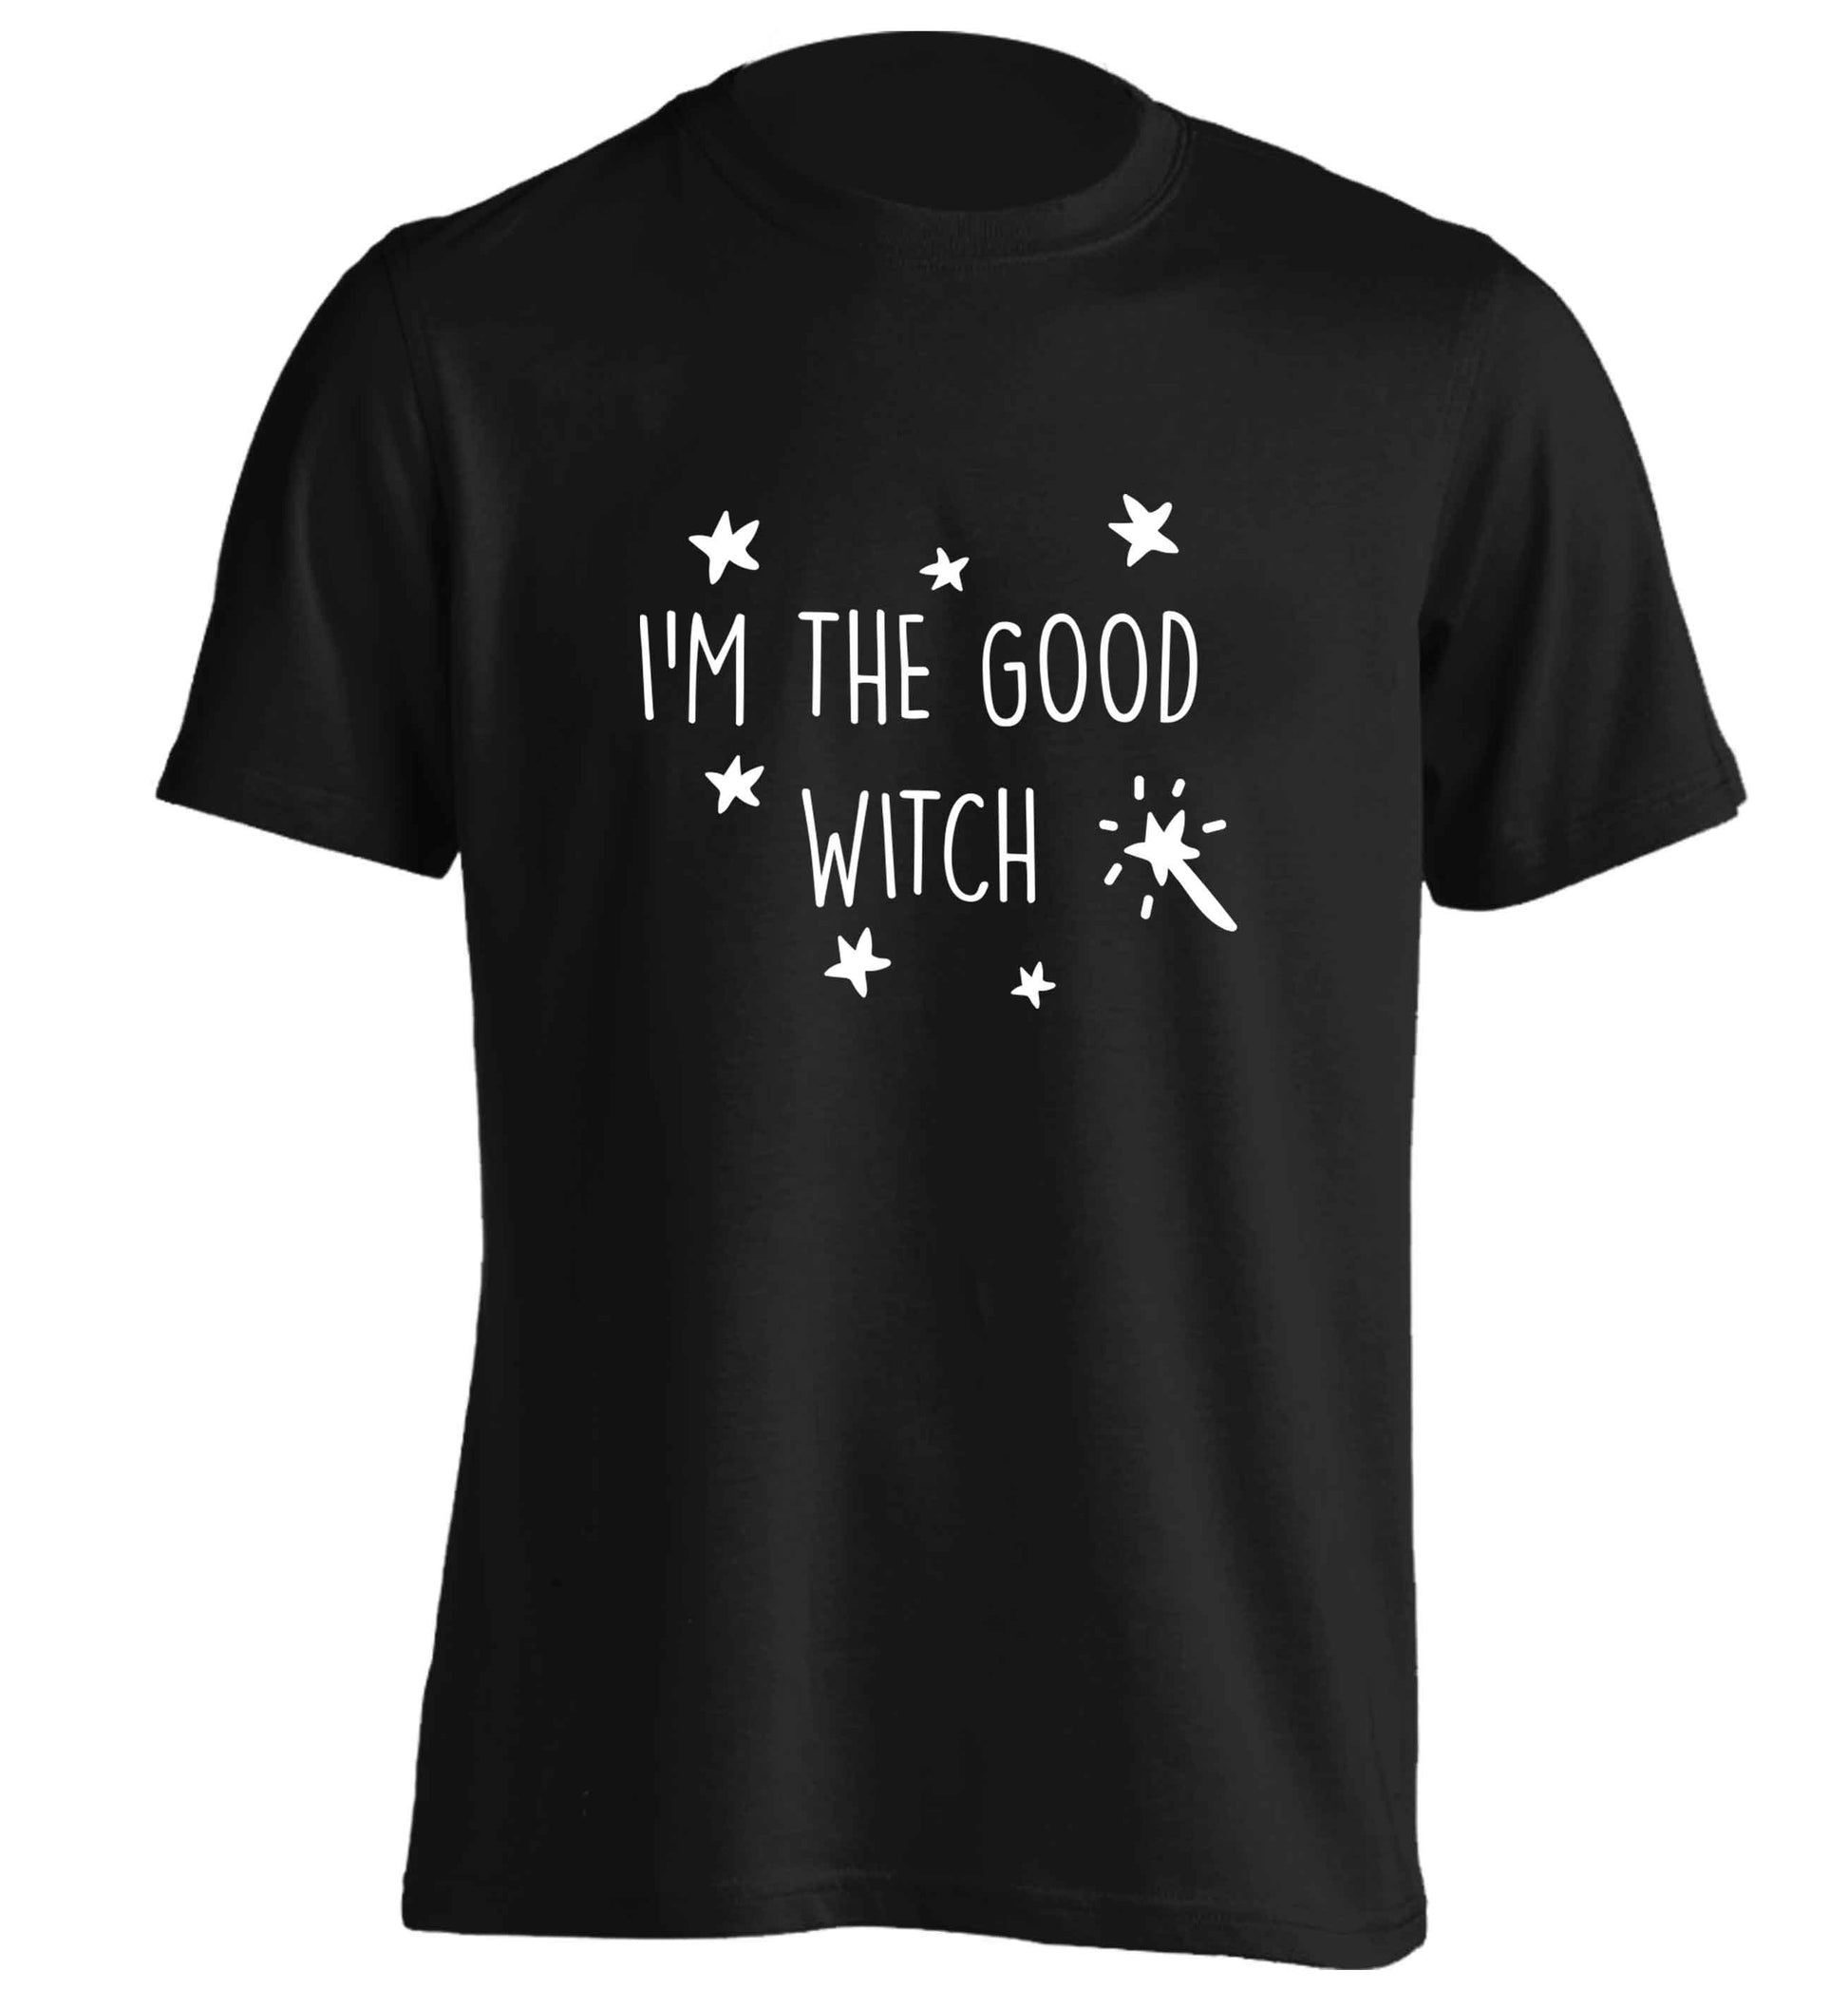 Good witch adults unisex black Tshirt 2XL